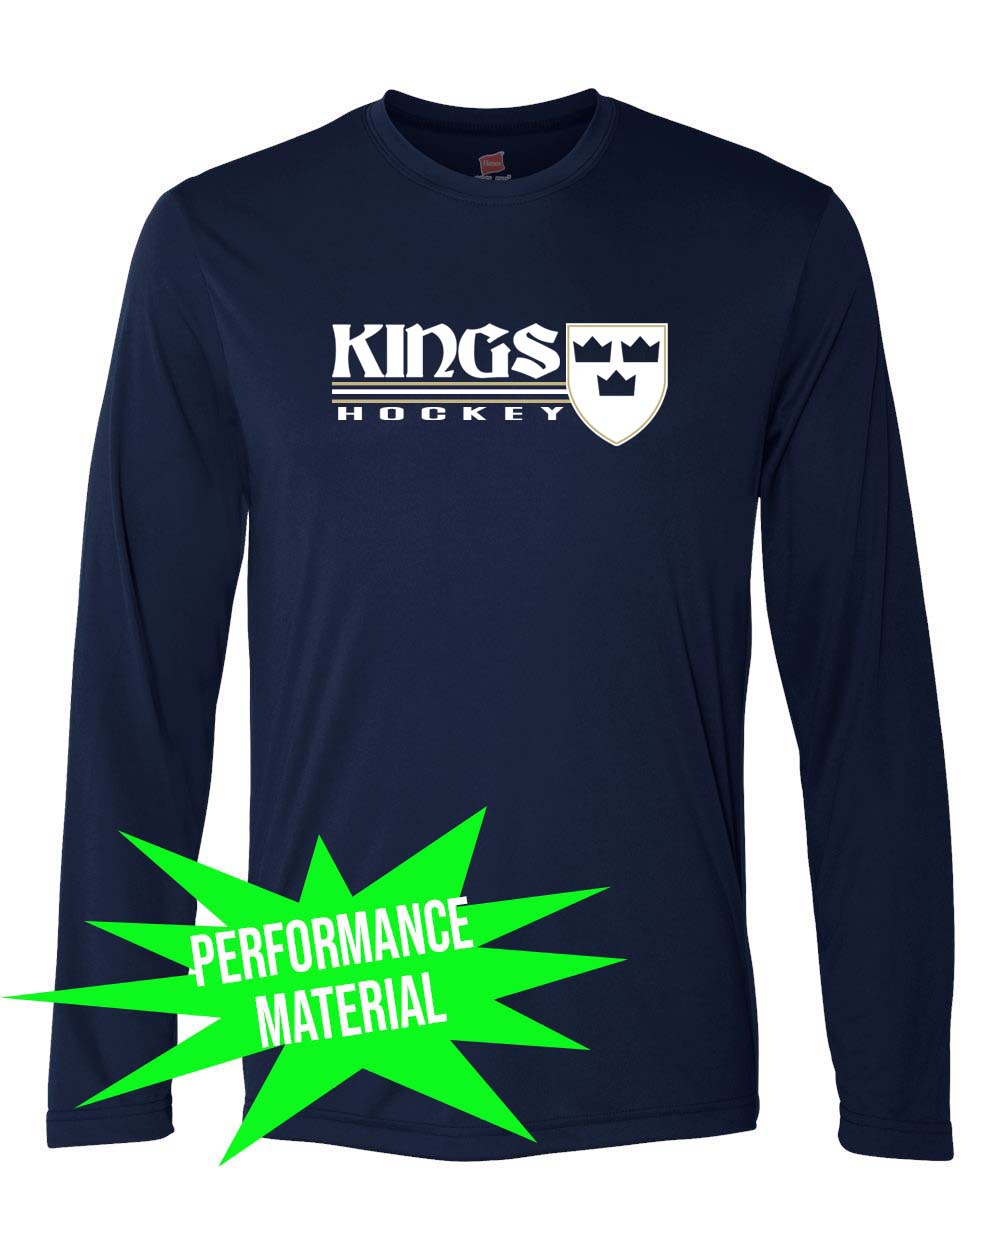 Kings Hockey Performance Material Design 3 Long Sleeve Shirt